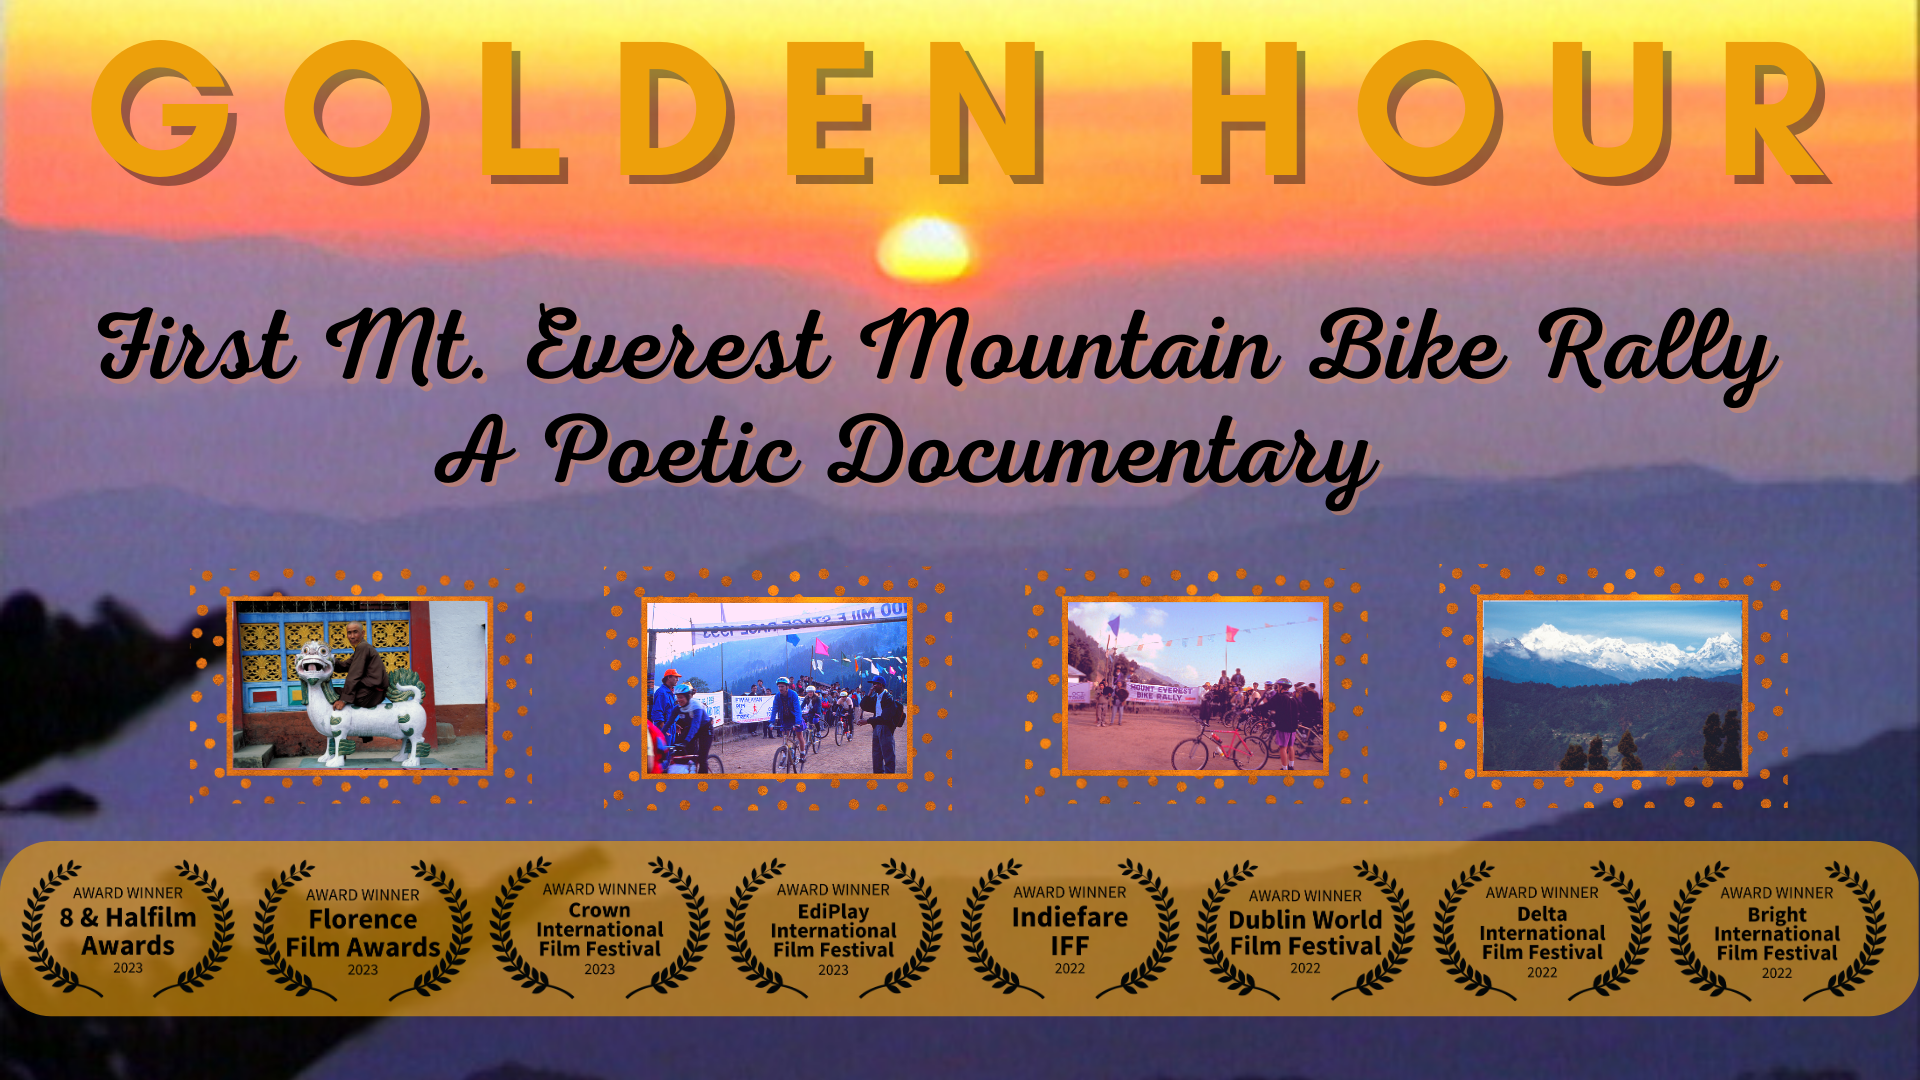 Golden Hour First Mt. Everest Mountain Bike Rally Poetic Award Winning Documentary